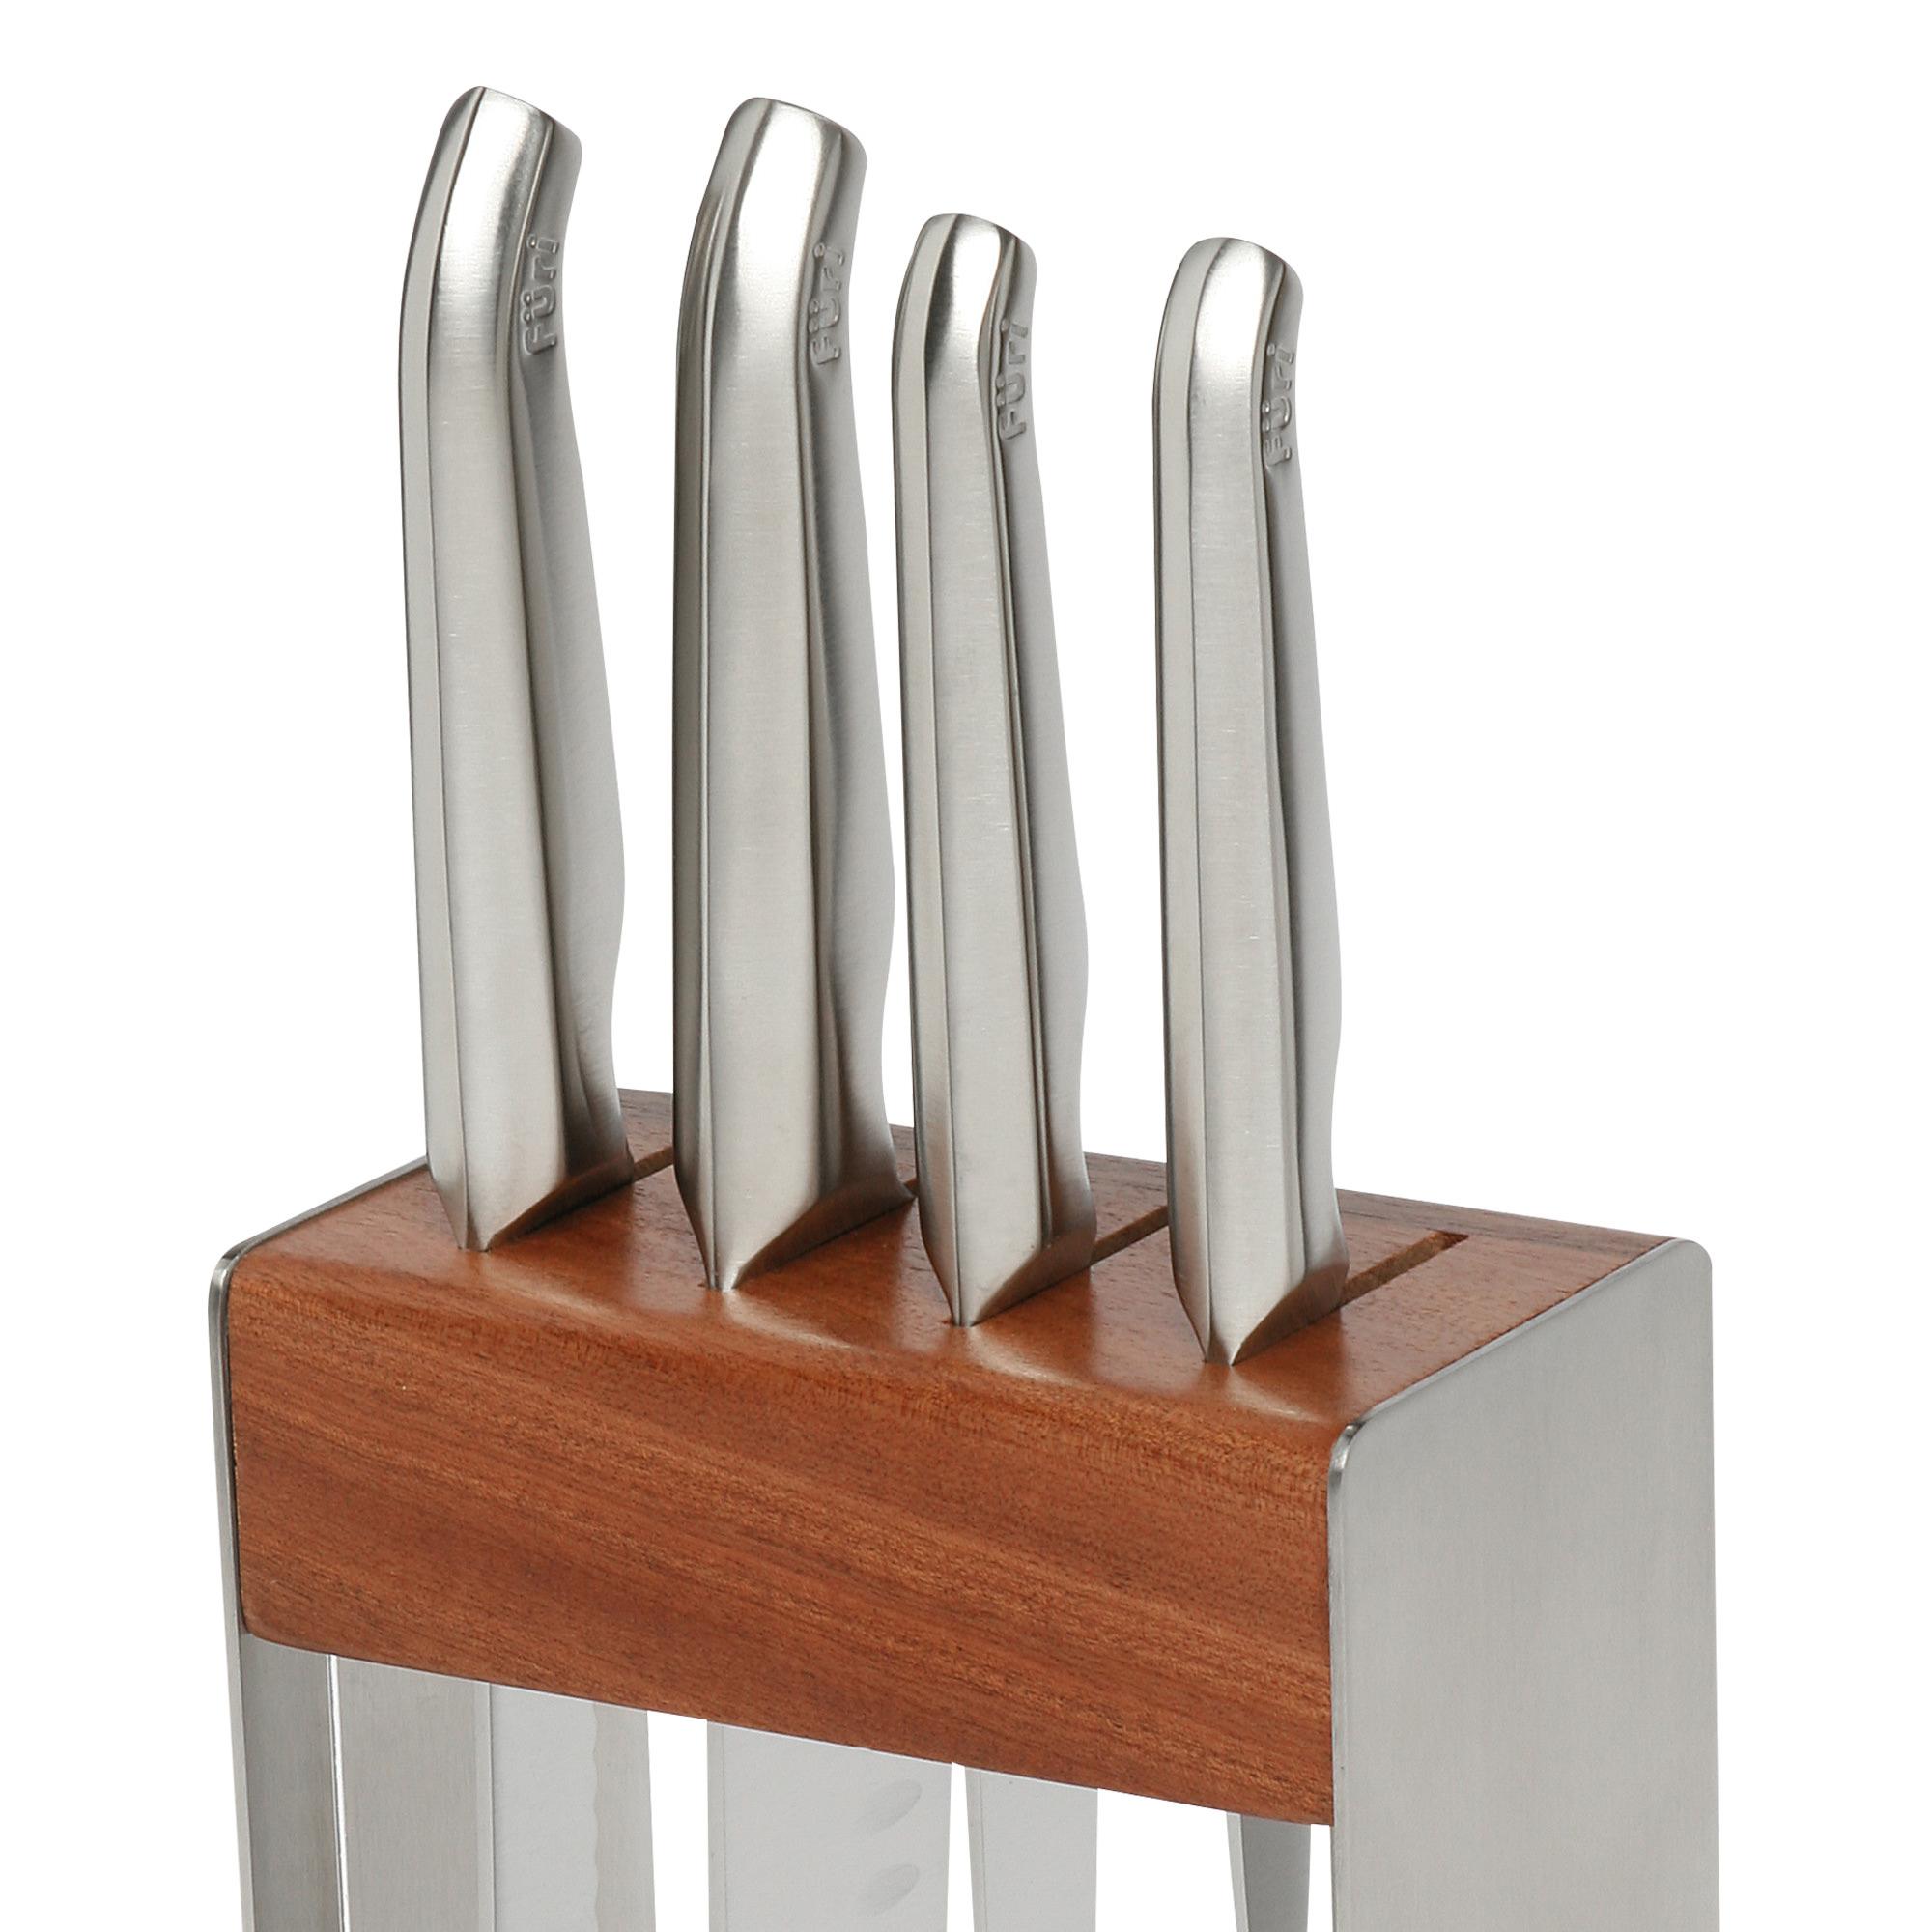 Furi Pro 5pc Stainless Steel Knife Block Set Image 3